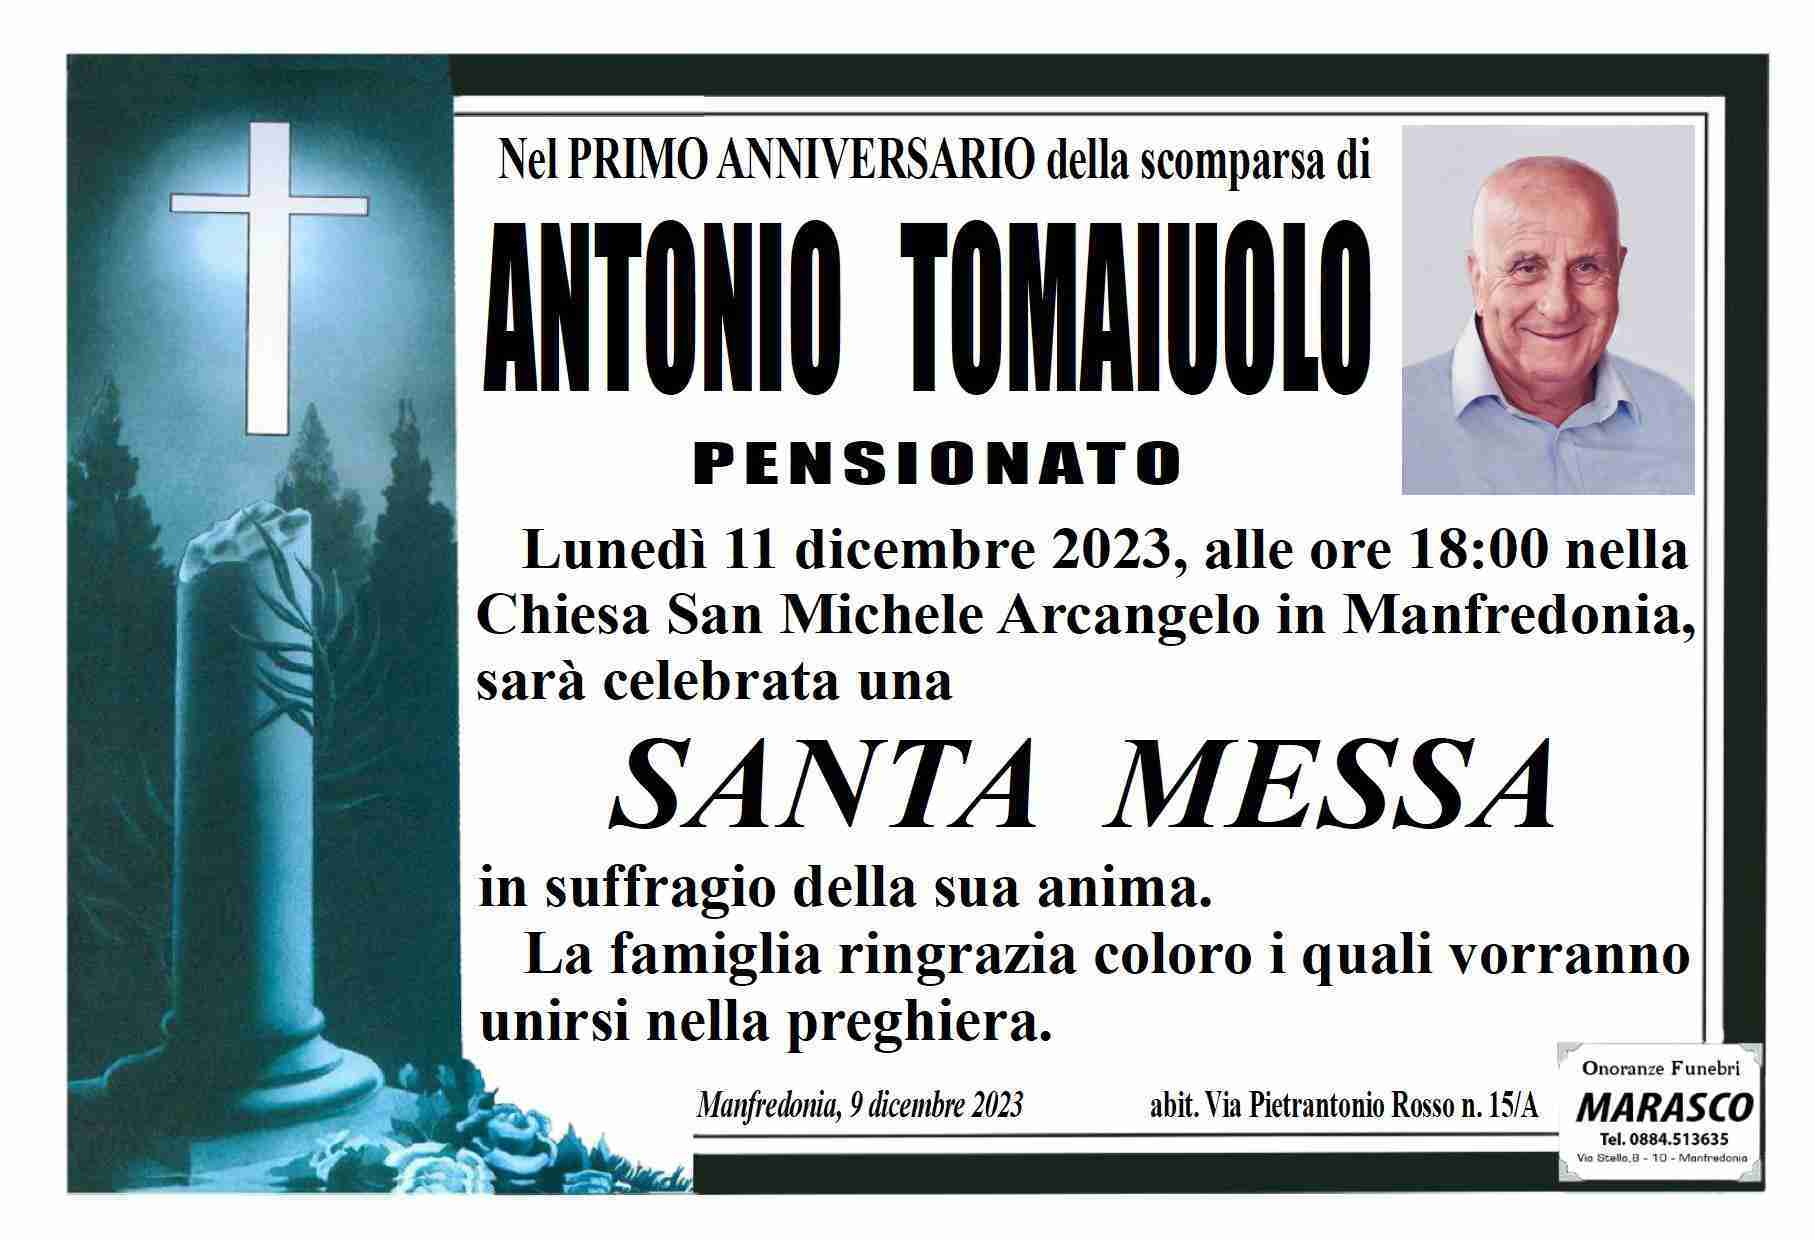 Antonio Tomaiuolo